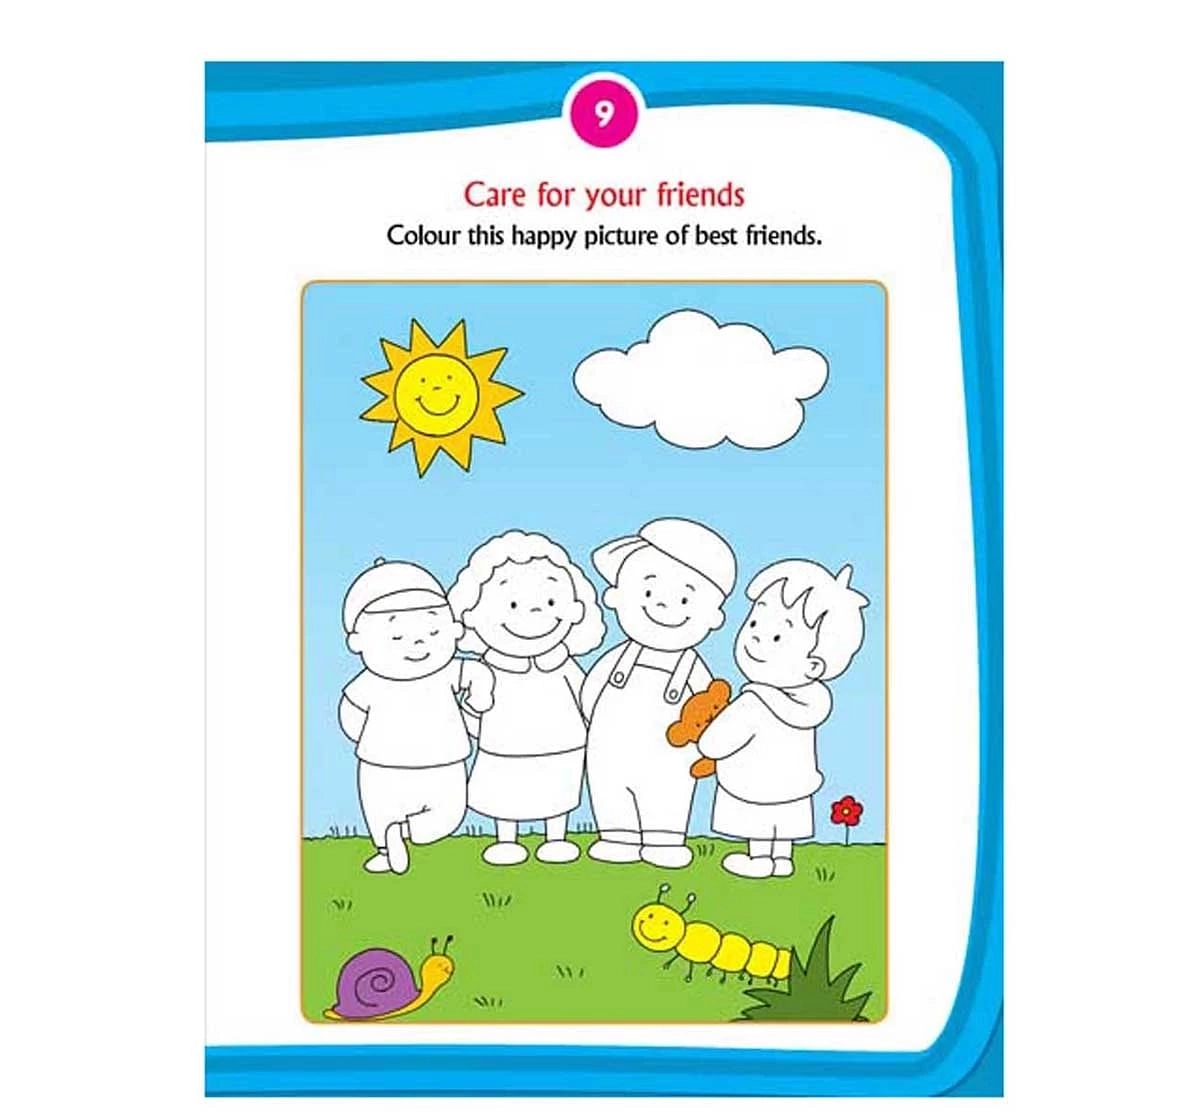 Dreamland Paper Back 1st Good Habit Activity Book for kids 3Y+, Multicolour